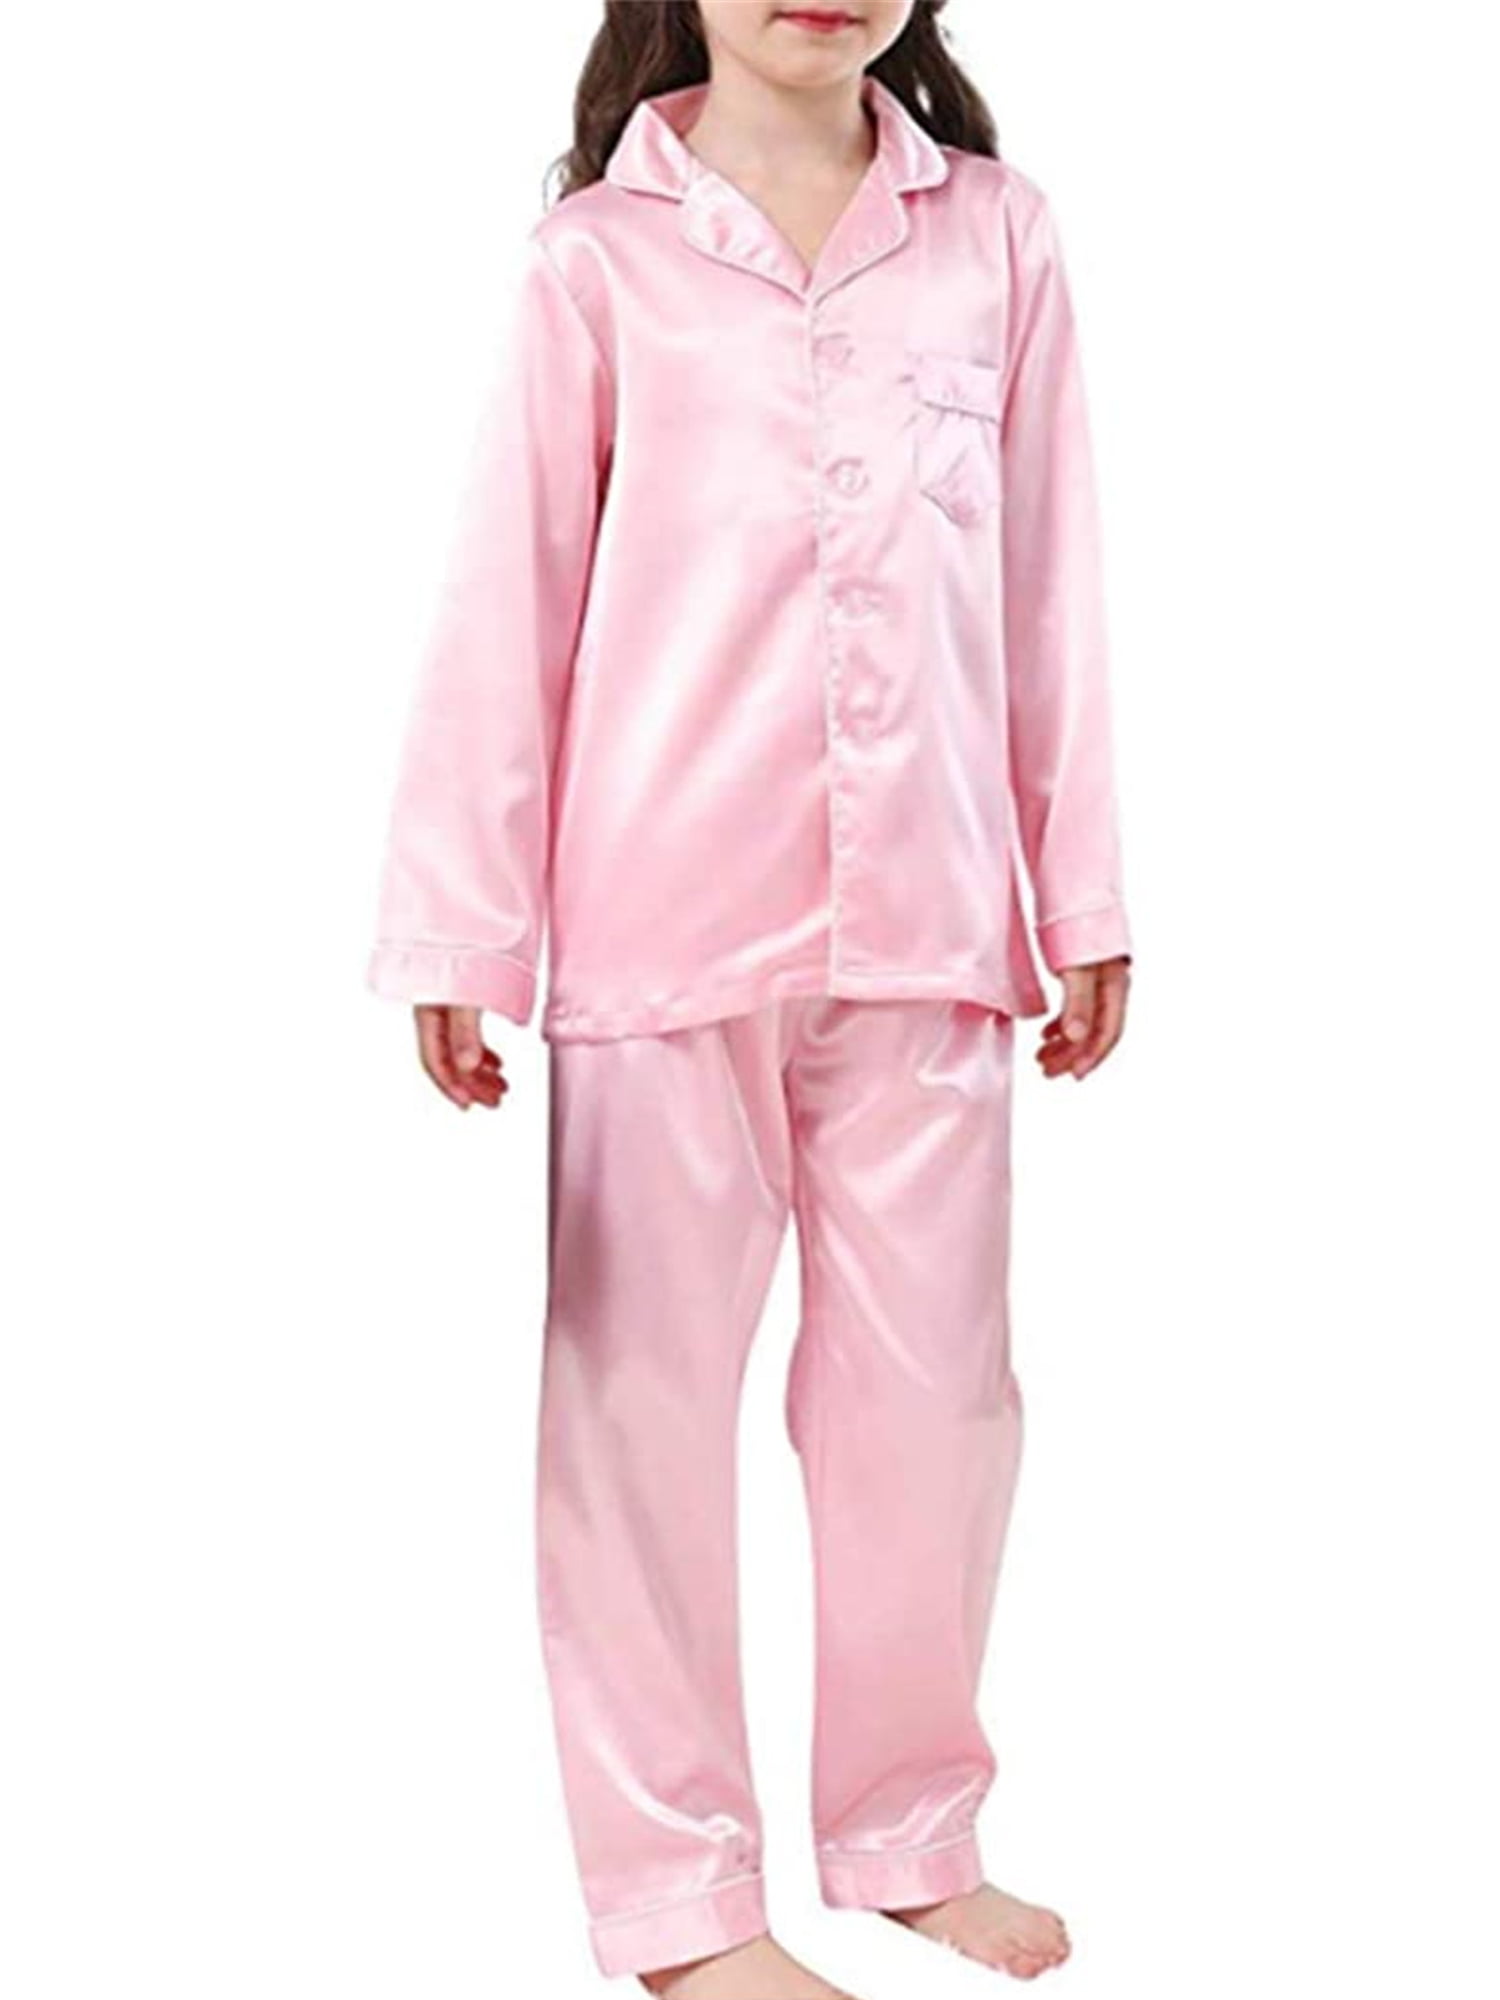 Toddler Baby Kids Satin Pajamas Set Pjs Sleepwear for Girls Boys Long/Short Sleeve Top Pants Solid Nightwear 